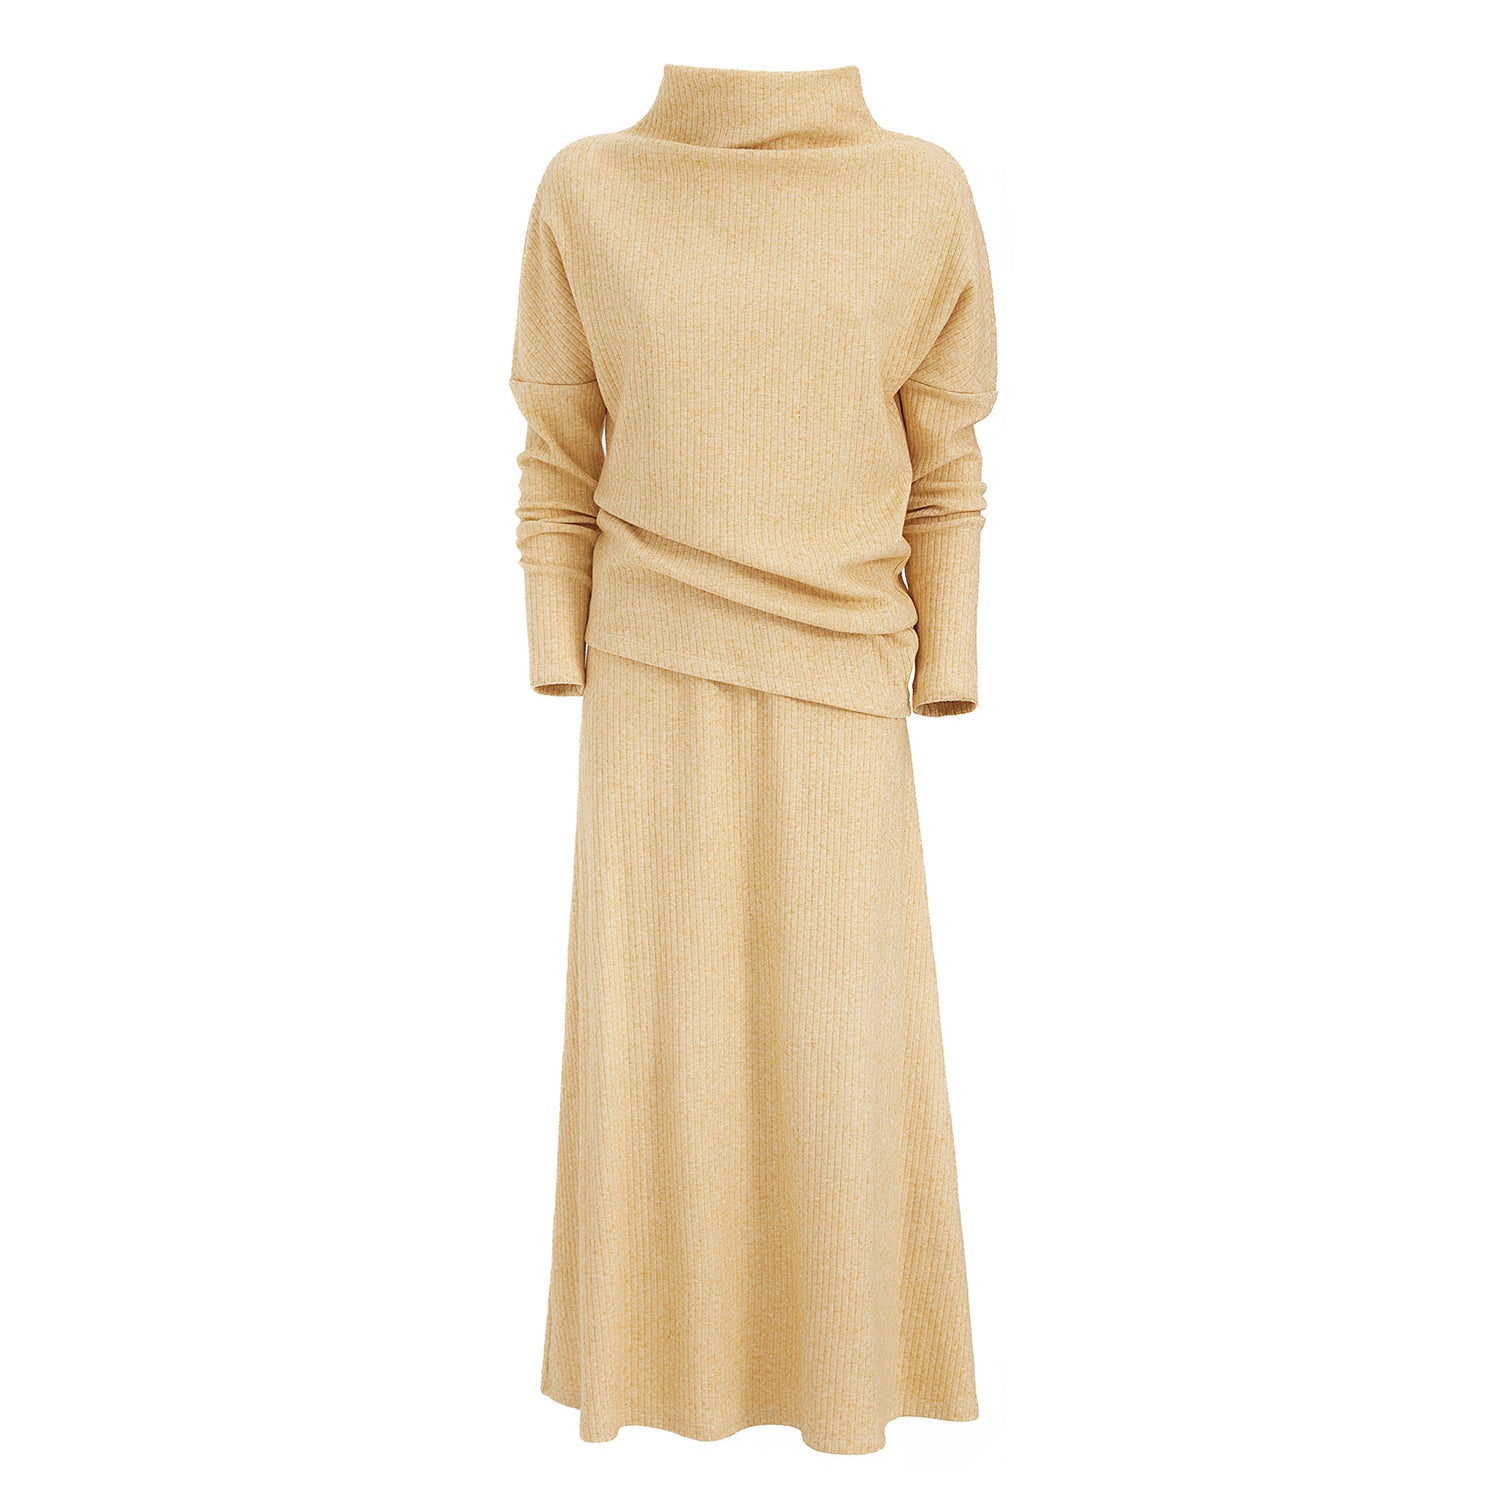 JULIA ALLERT - Rib Knit Basic Skirt | Pale Yellow, buy at DOORS NYC